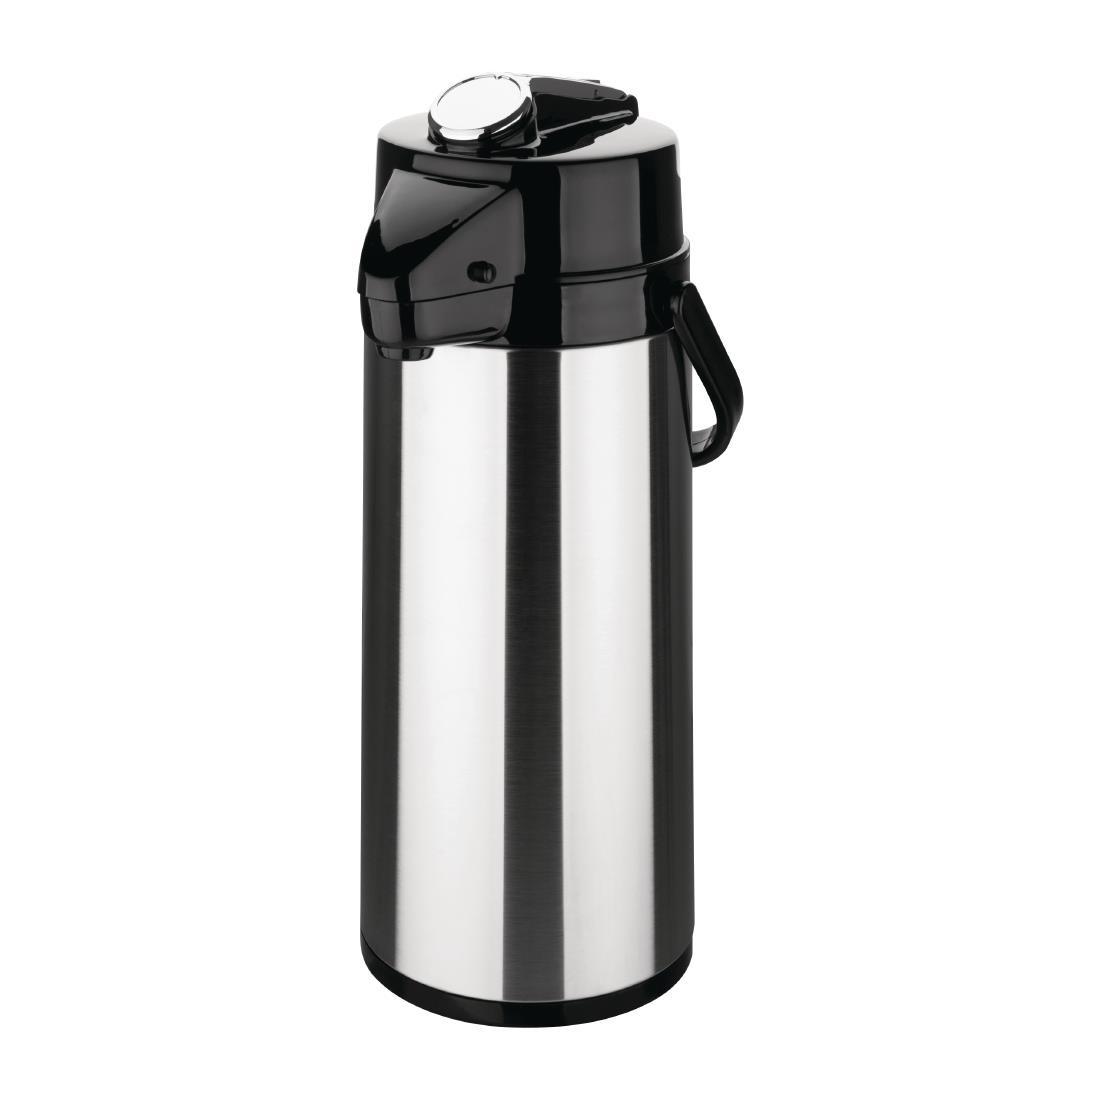 Buffalo Airpot Filter Coffee Maker - CW306  - 2